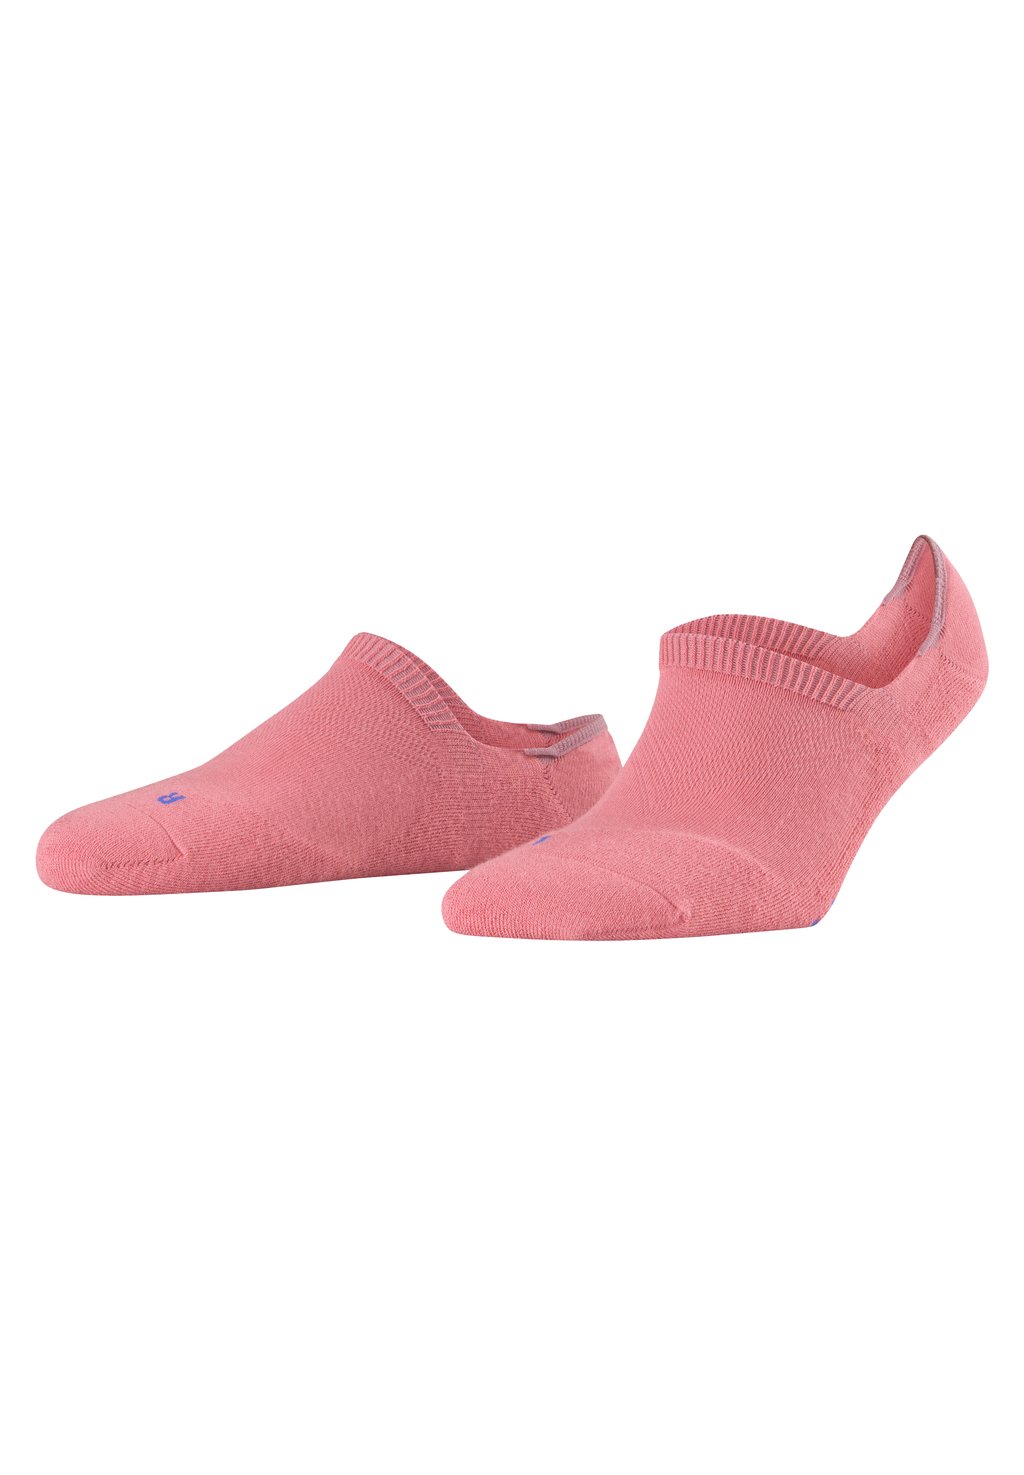 Носки COOL KICK ANATOMICAL PLUSH SOLE FALKE, цвет powder pink (8684) носки cool kick anatomical plush sole falke цвет cobalt